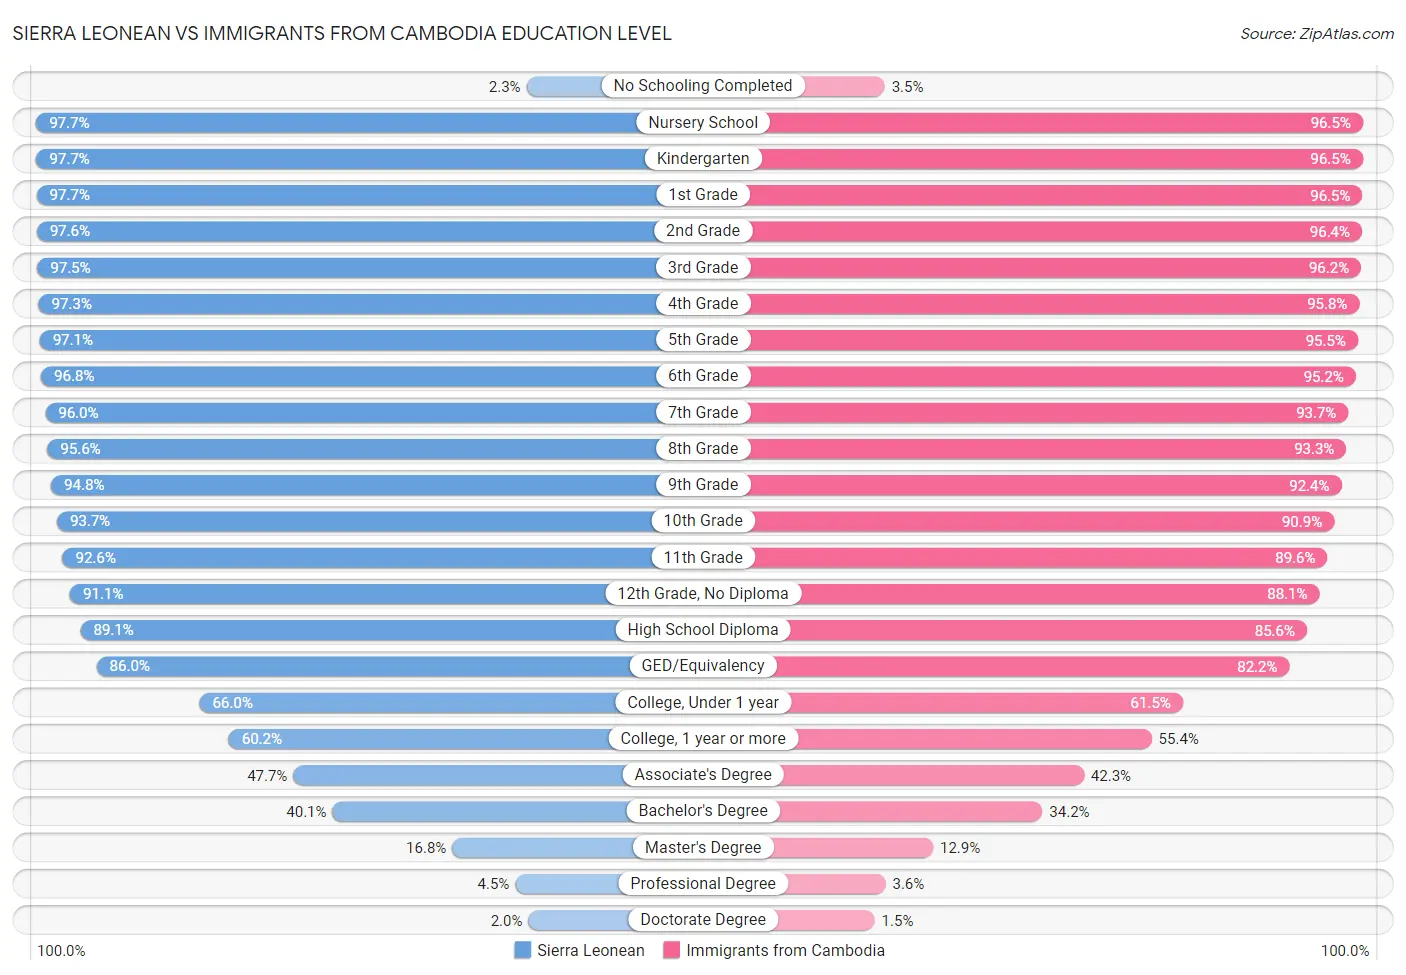 Sierra Leonean vs Immigrants from Cambodia Education Level